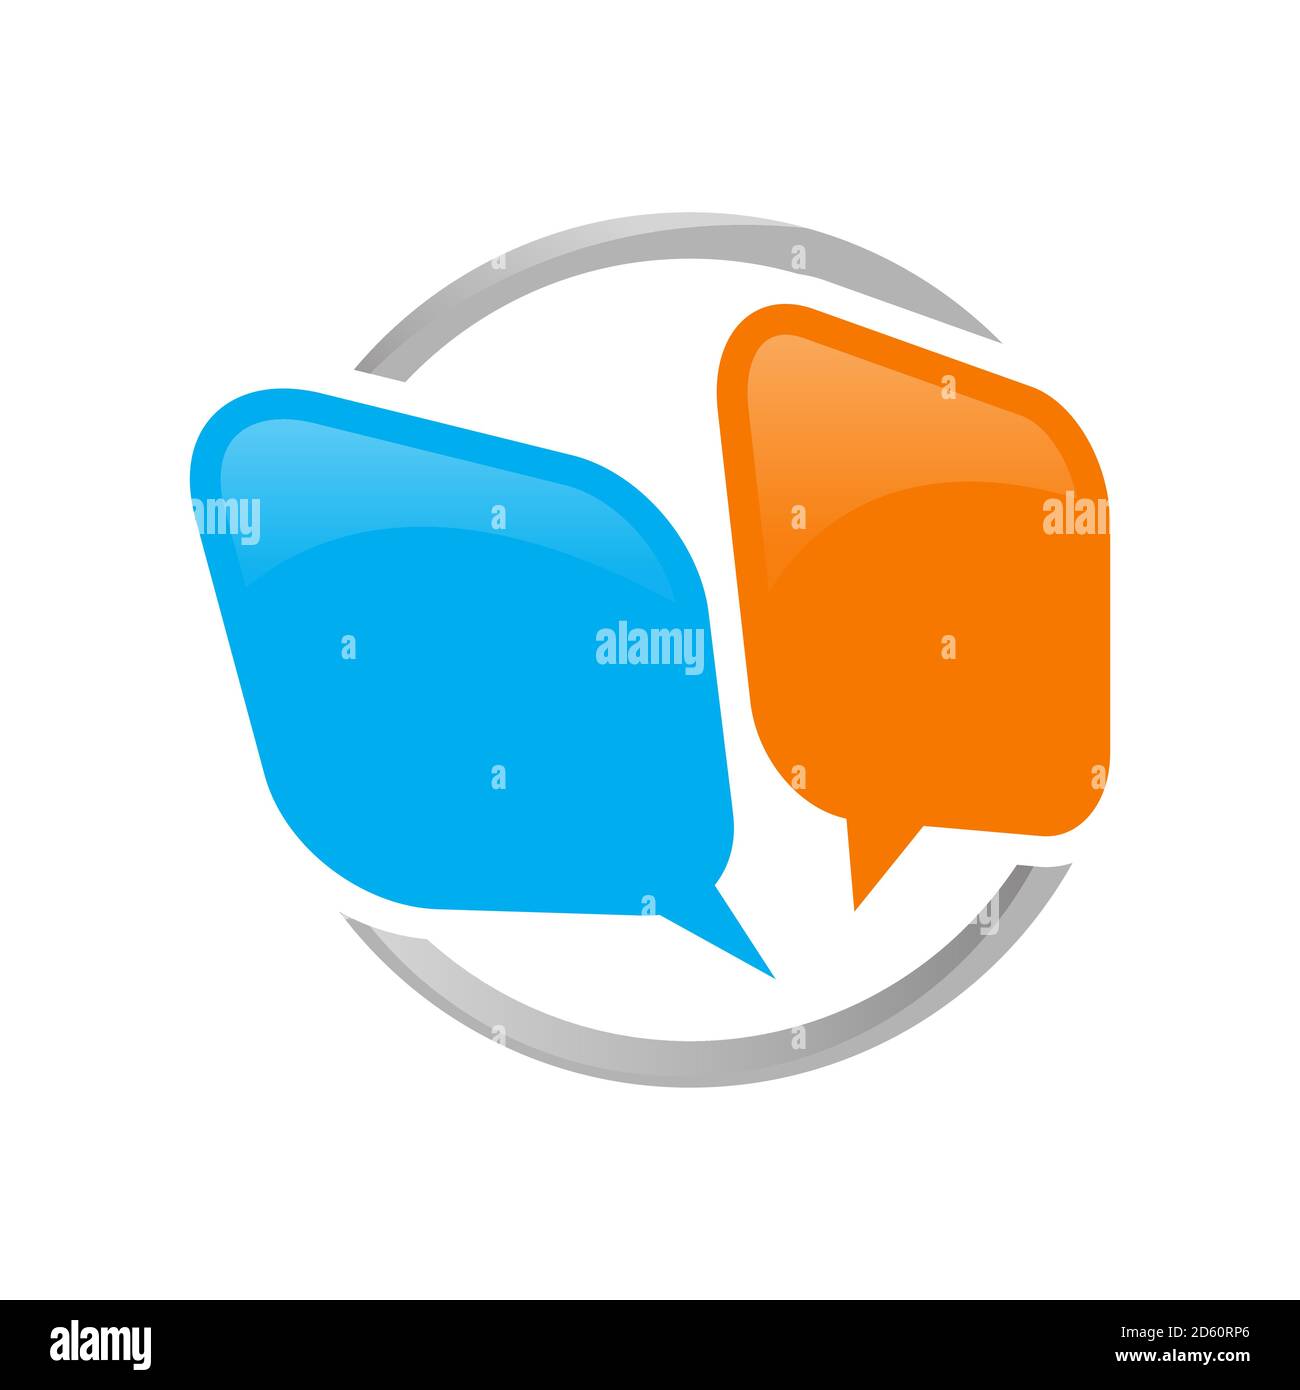 applications de chat créatives ballons de dialogue coloré bulle de dialogue de dialogue de dialogue logo de chat illustrations d'icônes vectorielles Illustration de Vecteur